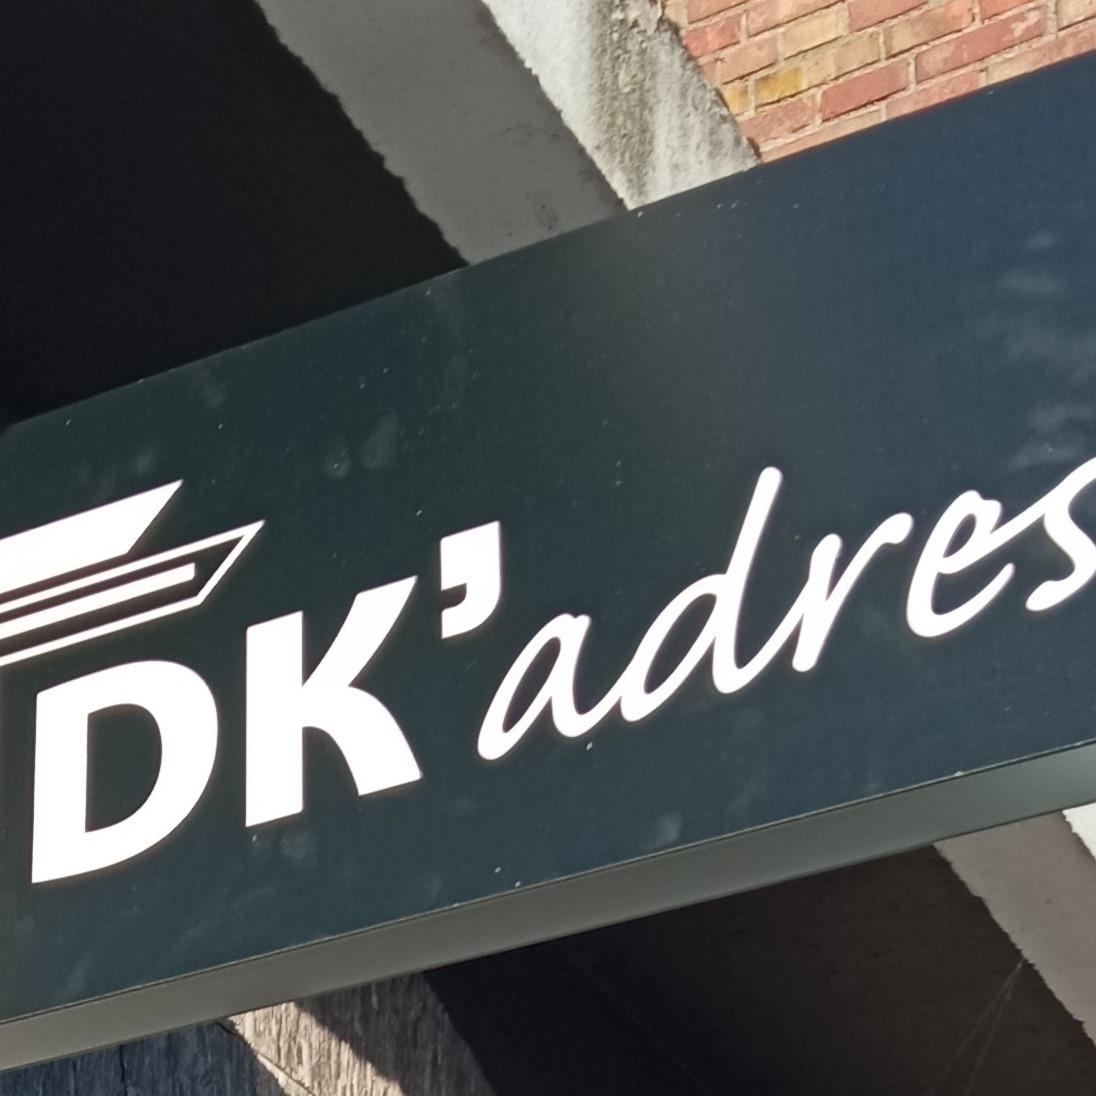 DK'adres